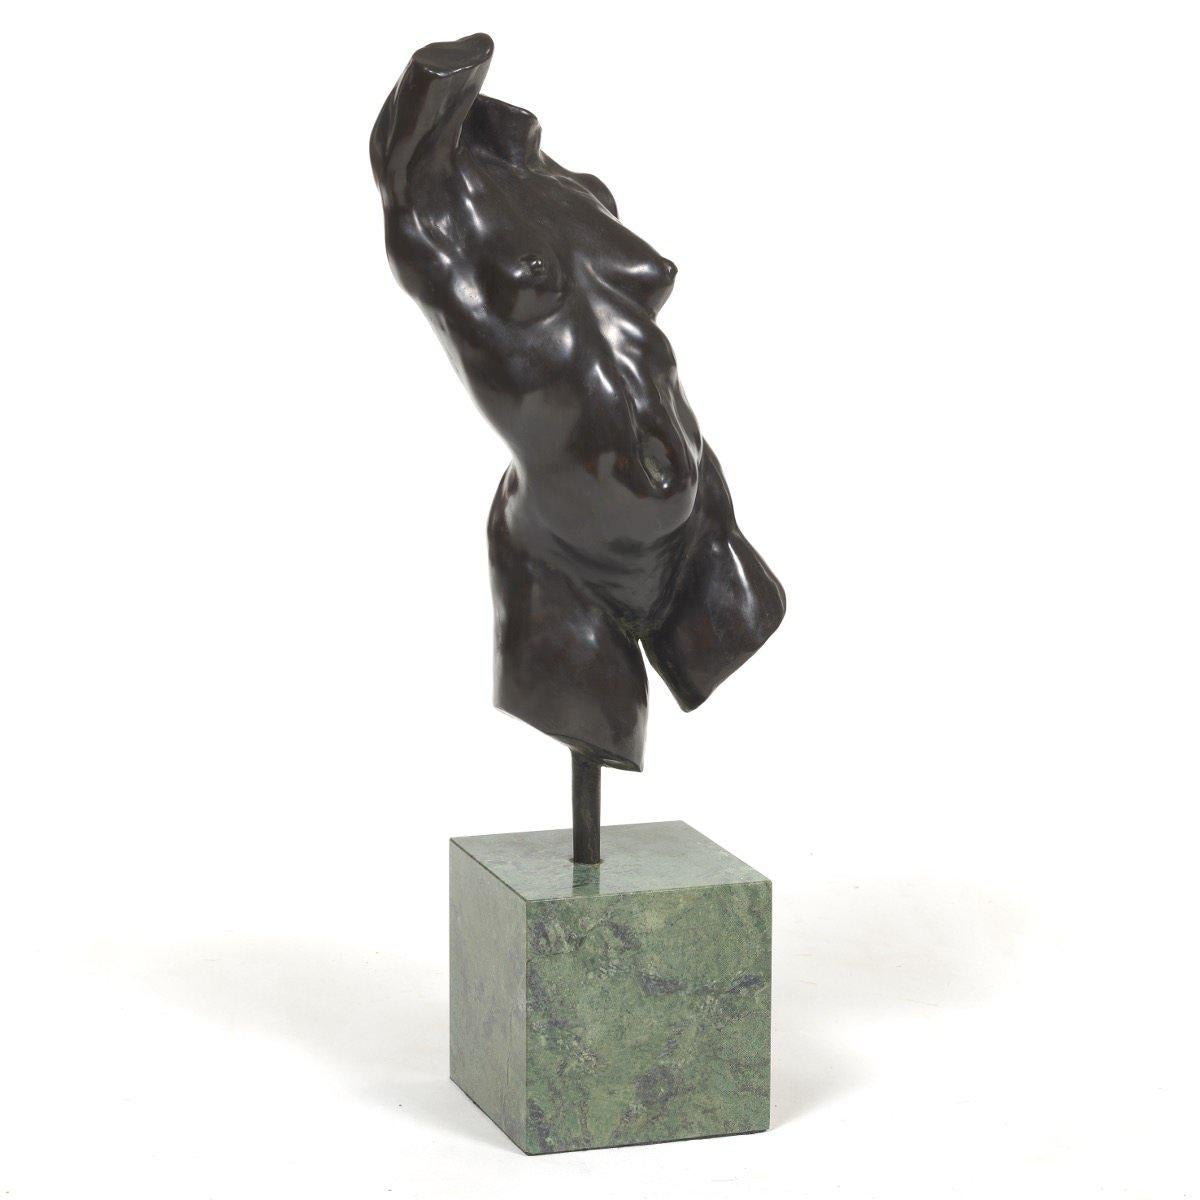 Nude Female Torso Bronze Sculpture, 20th Century Contemporary American Artist - Gold Figurative Sculpture by Alan Cottrill